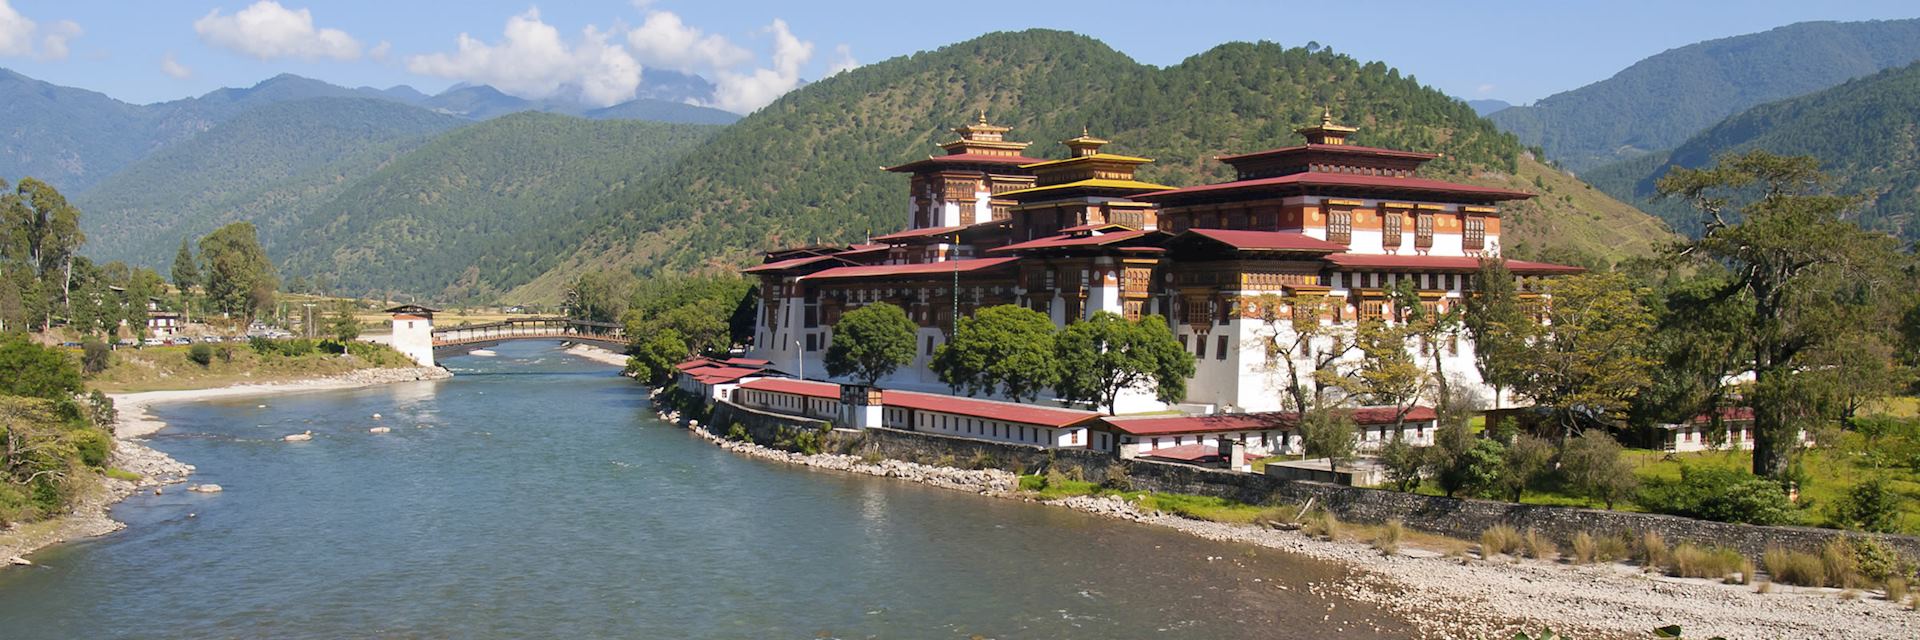 Punakha Dzong and the Mo Chhu River